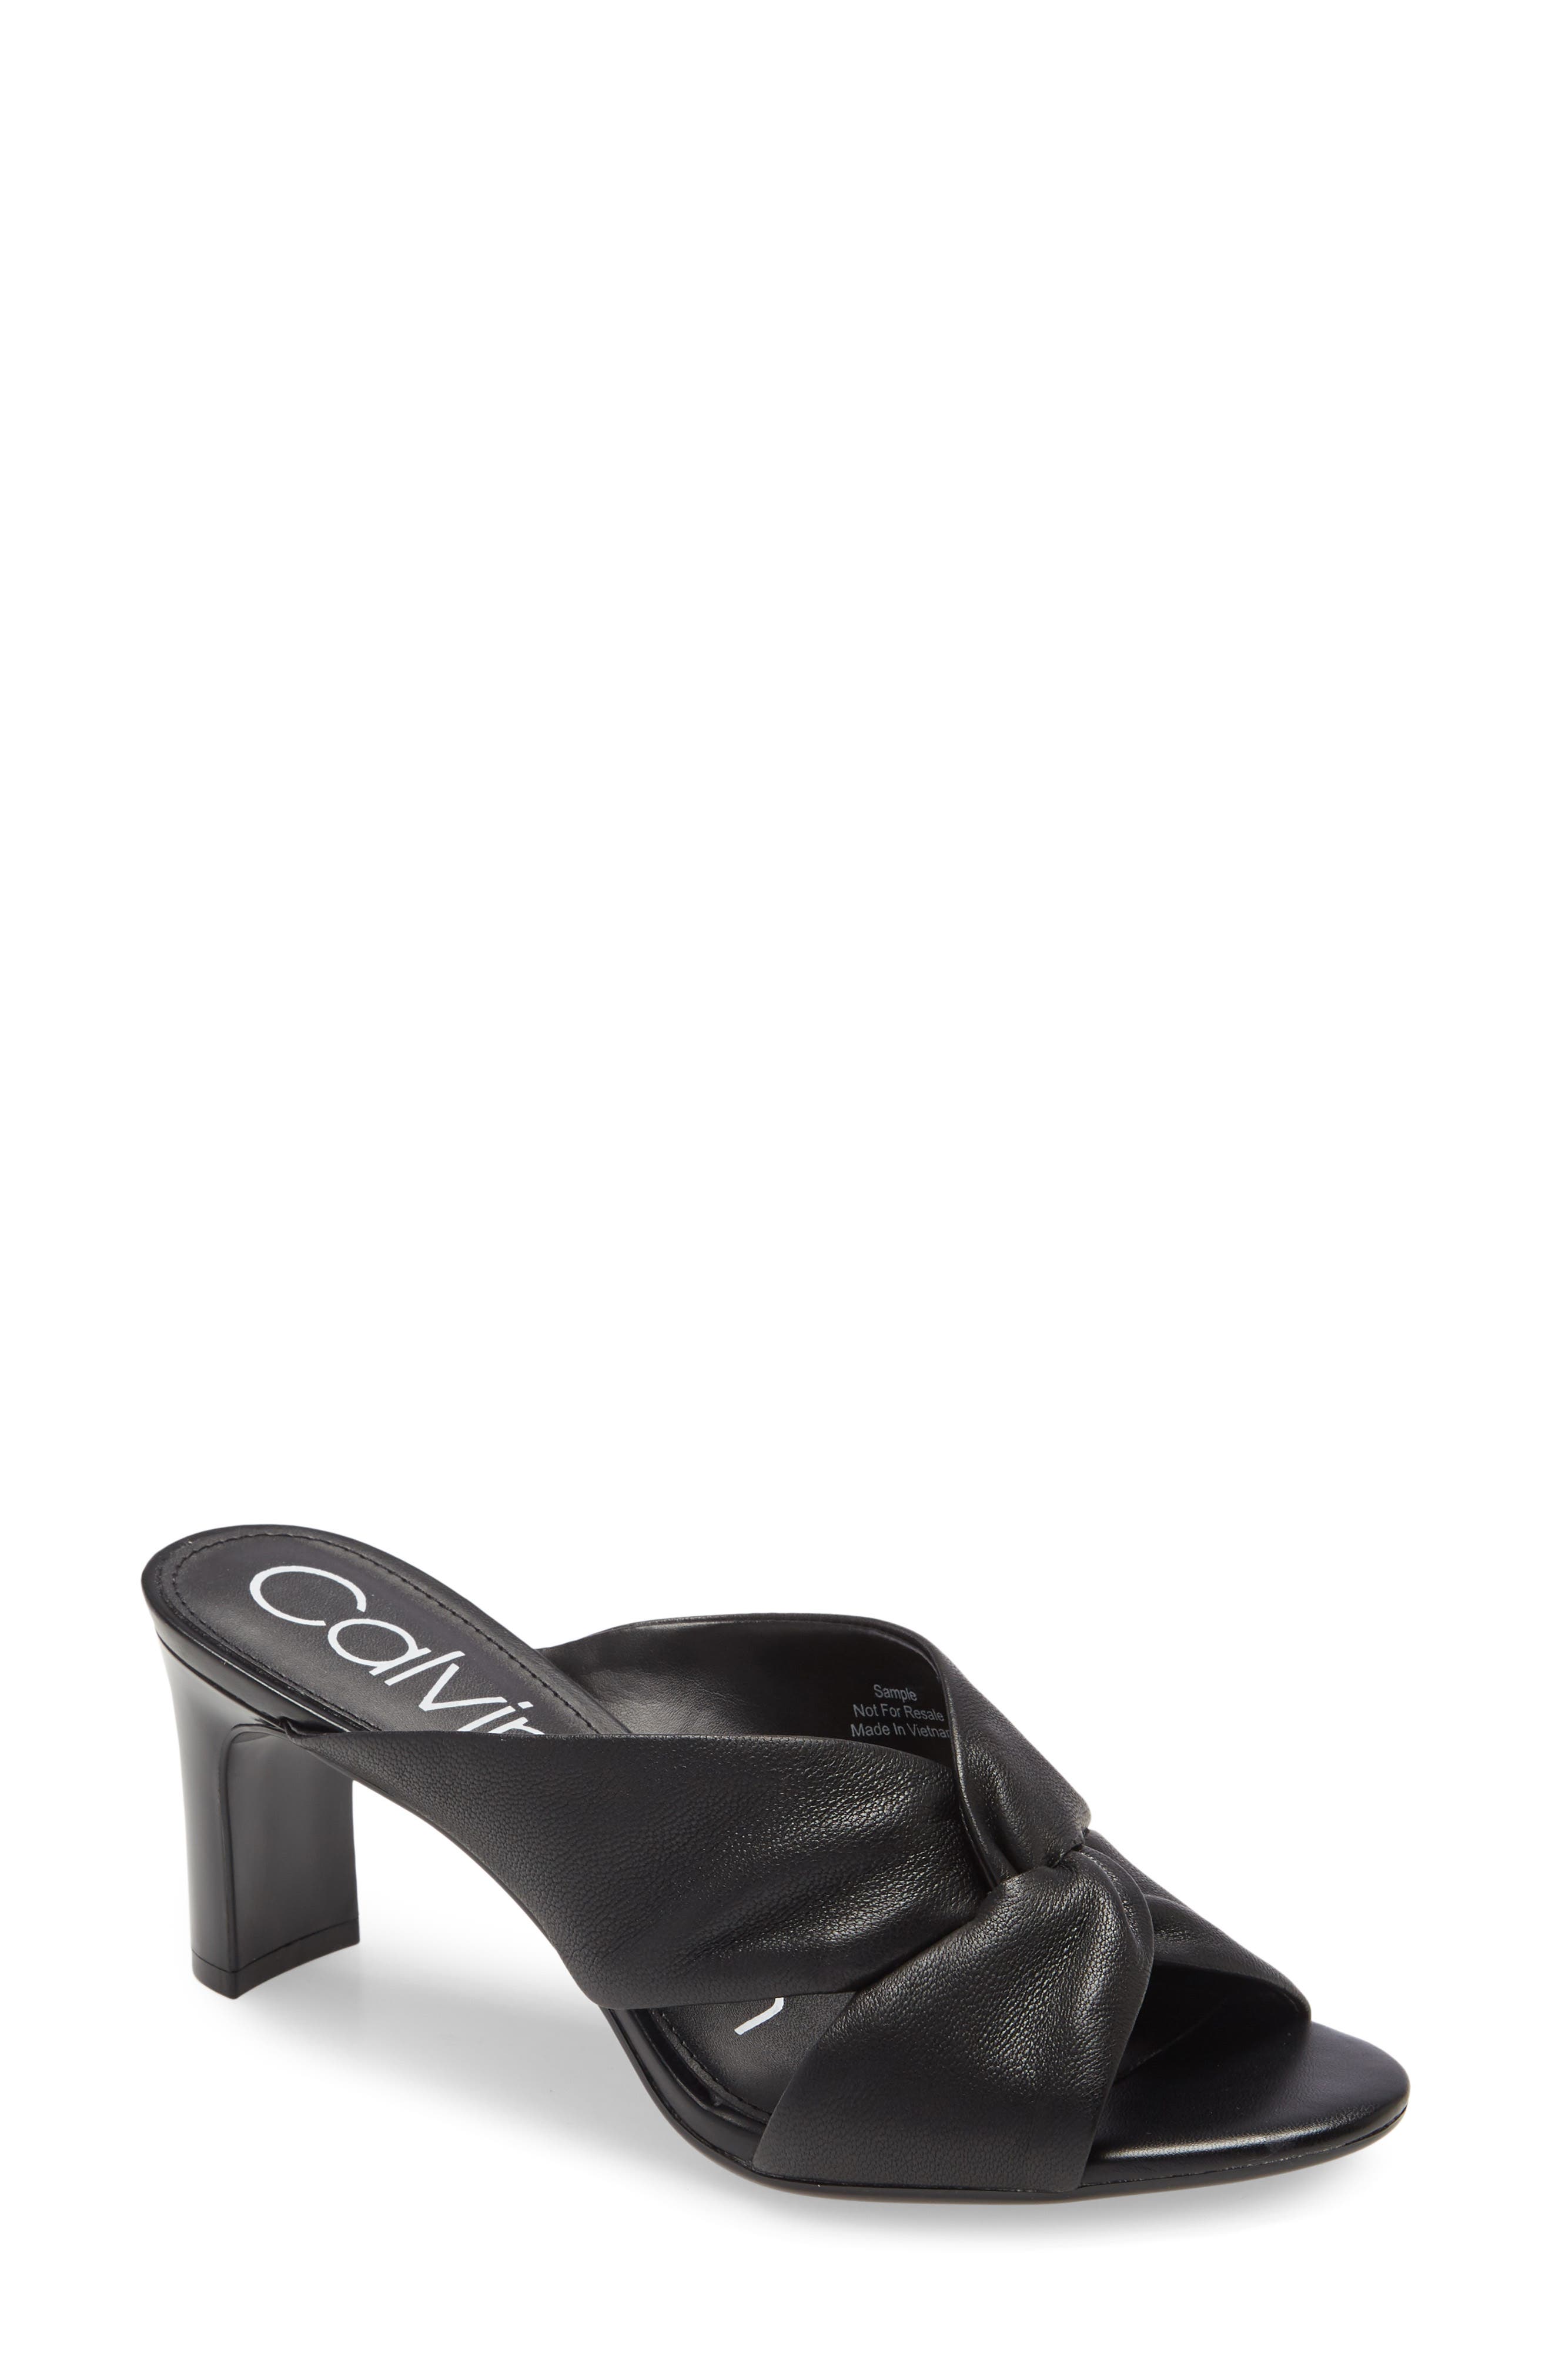 UPC 194060410524 product image for Women's Calvin Klein Omarion Sandal, Size 6 M - Black | upcitemdb.com